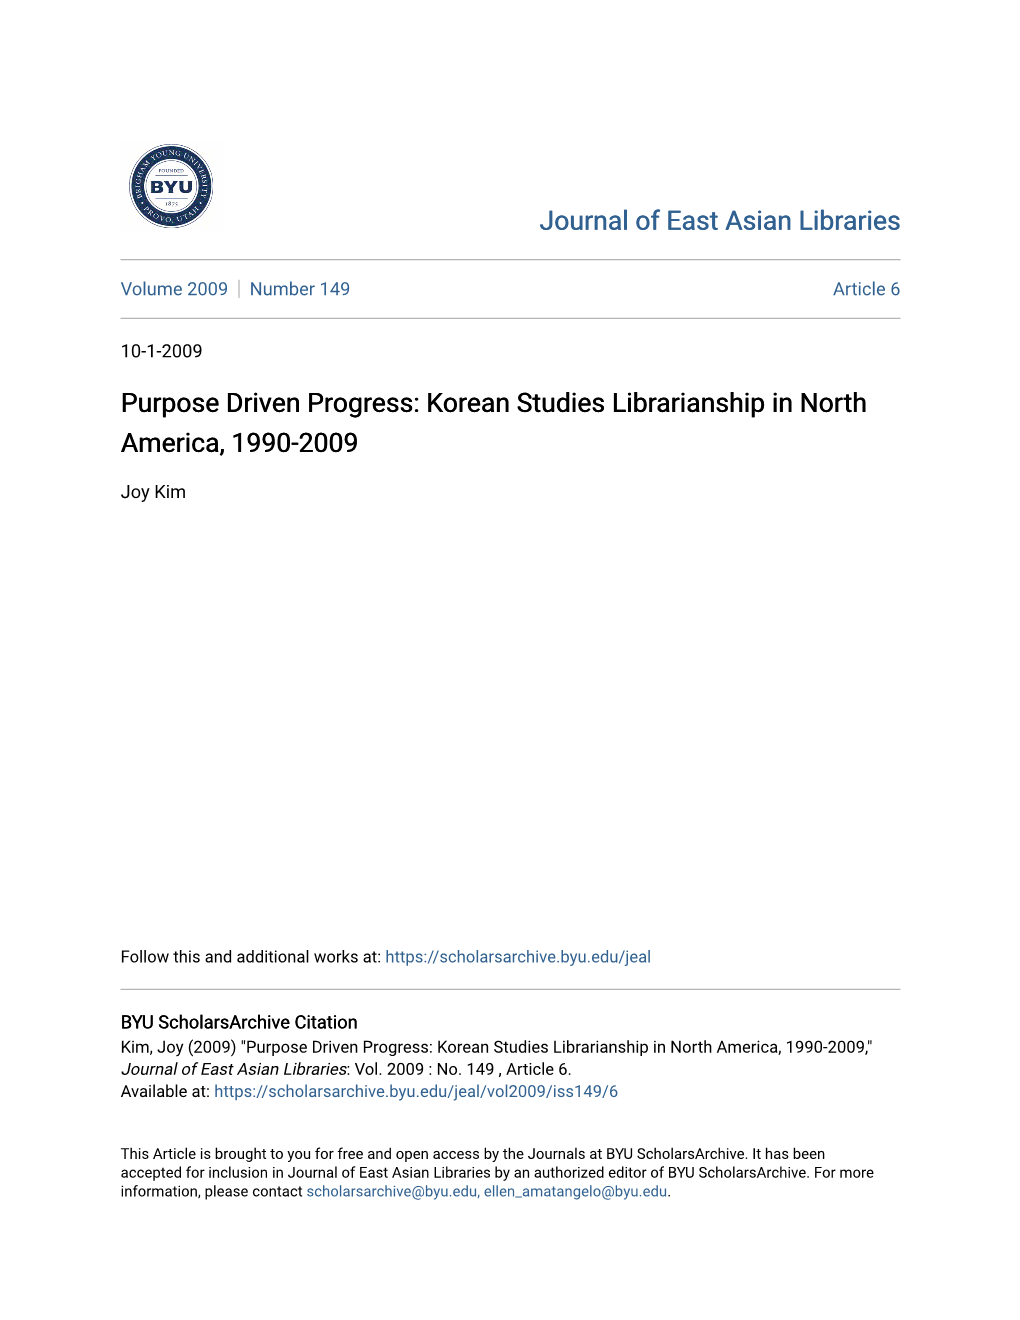 Korean Studies Librarianship in North America, 1990-2009